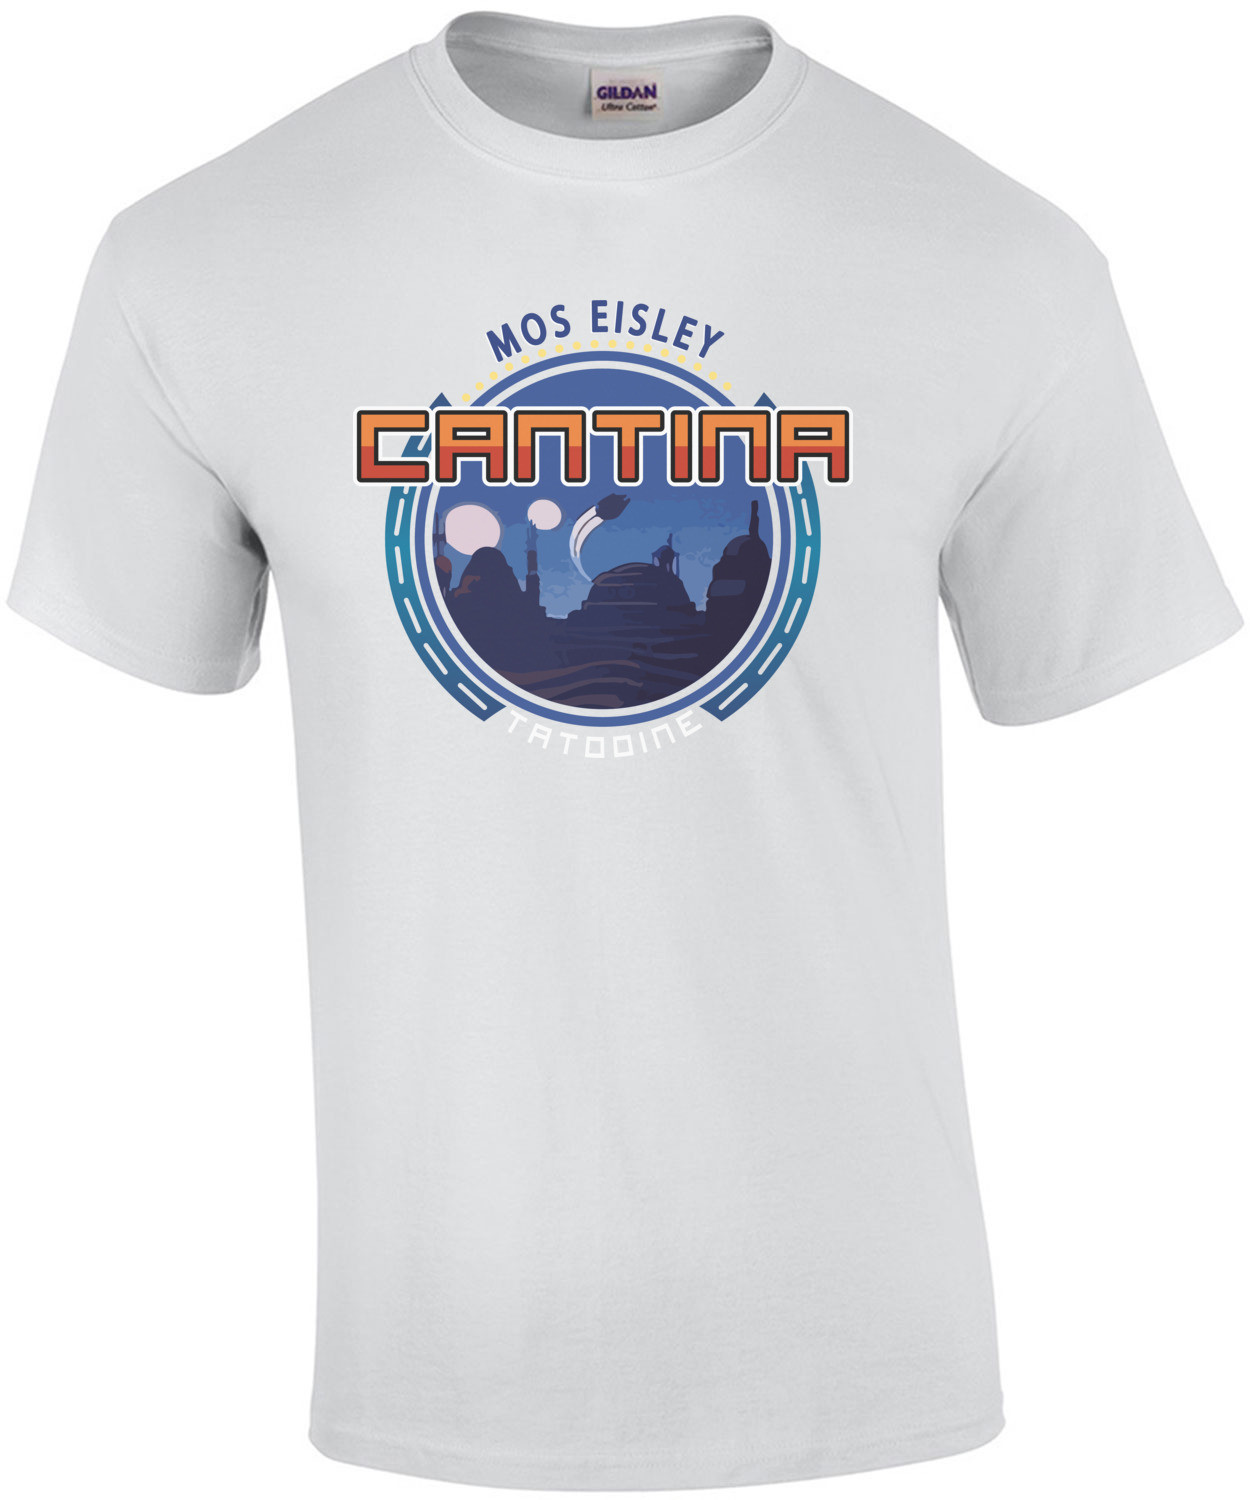  Mos Eisley Cantina Tatooine - Star Wars T-Shirt